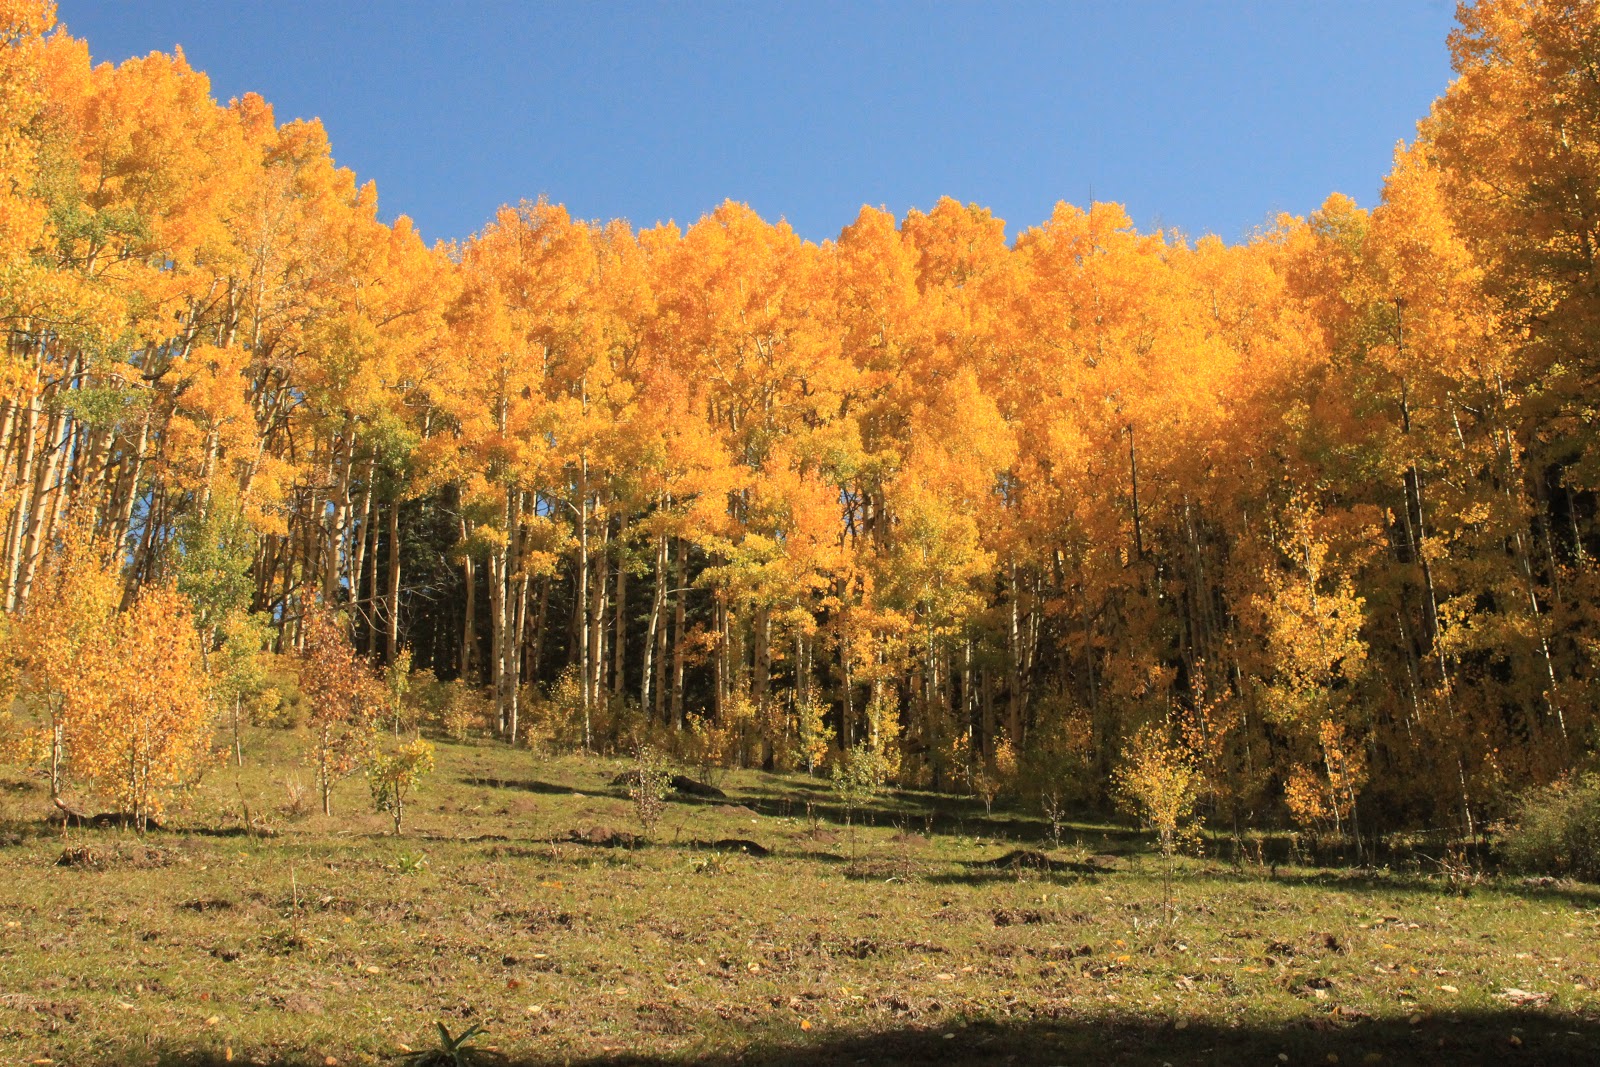 Til the Last Hemlock Dies: Fall Colors Colorado and Fall Colors Carolina: